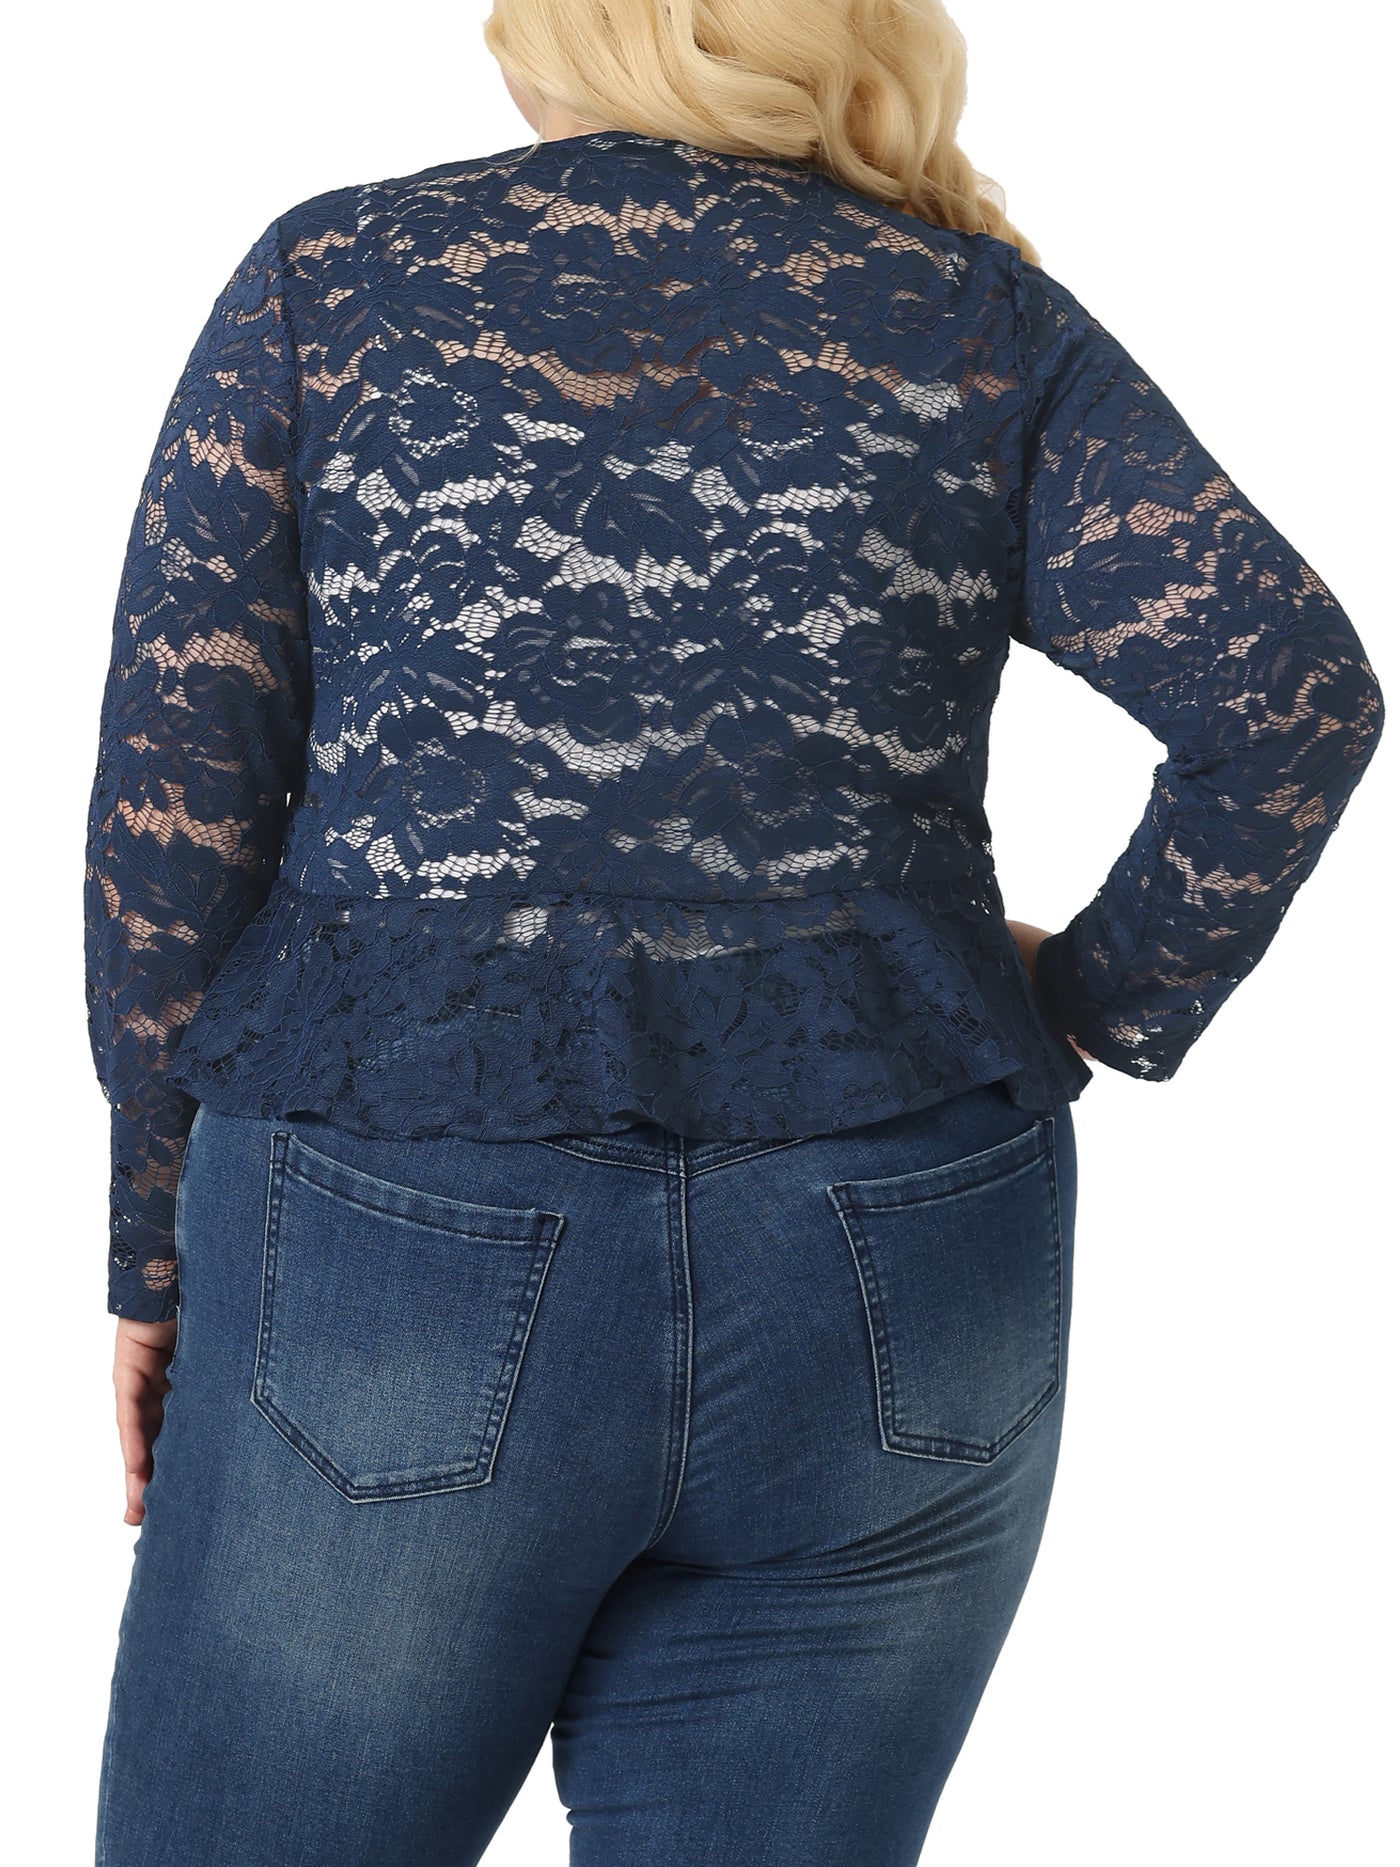 Bublédon Plus Size Cardigan for Women Bolero Shrug 3/4 Sleeve Tie Front Sheer Lace Crop Cardigans